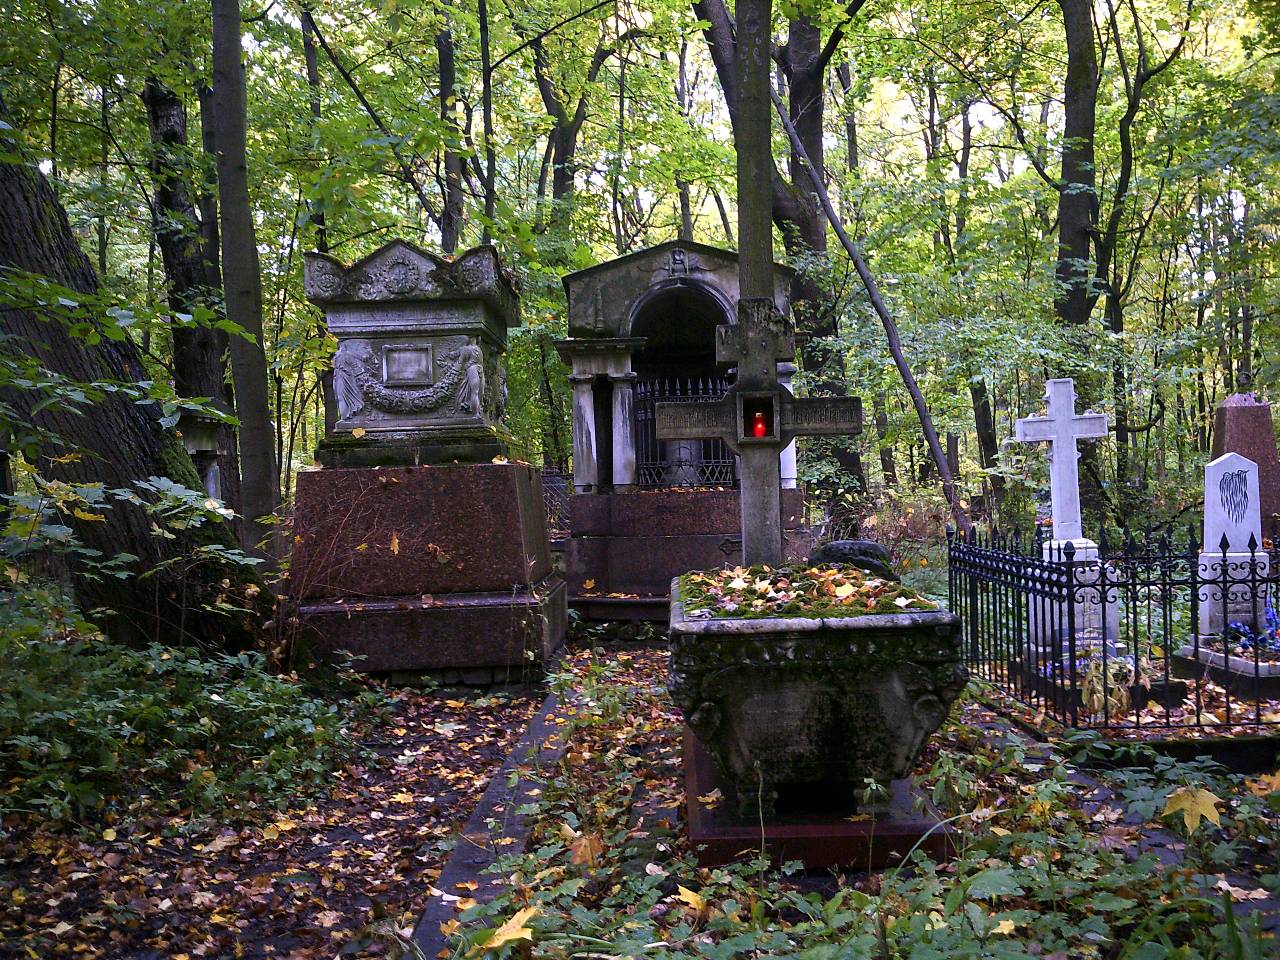 кладбища санкт петербурга могилы знаменитостей